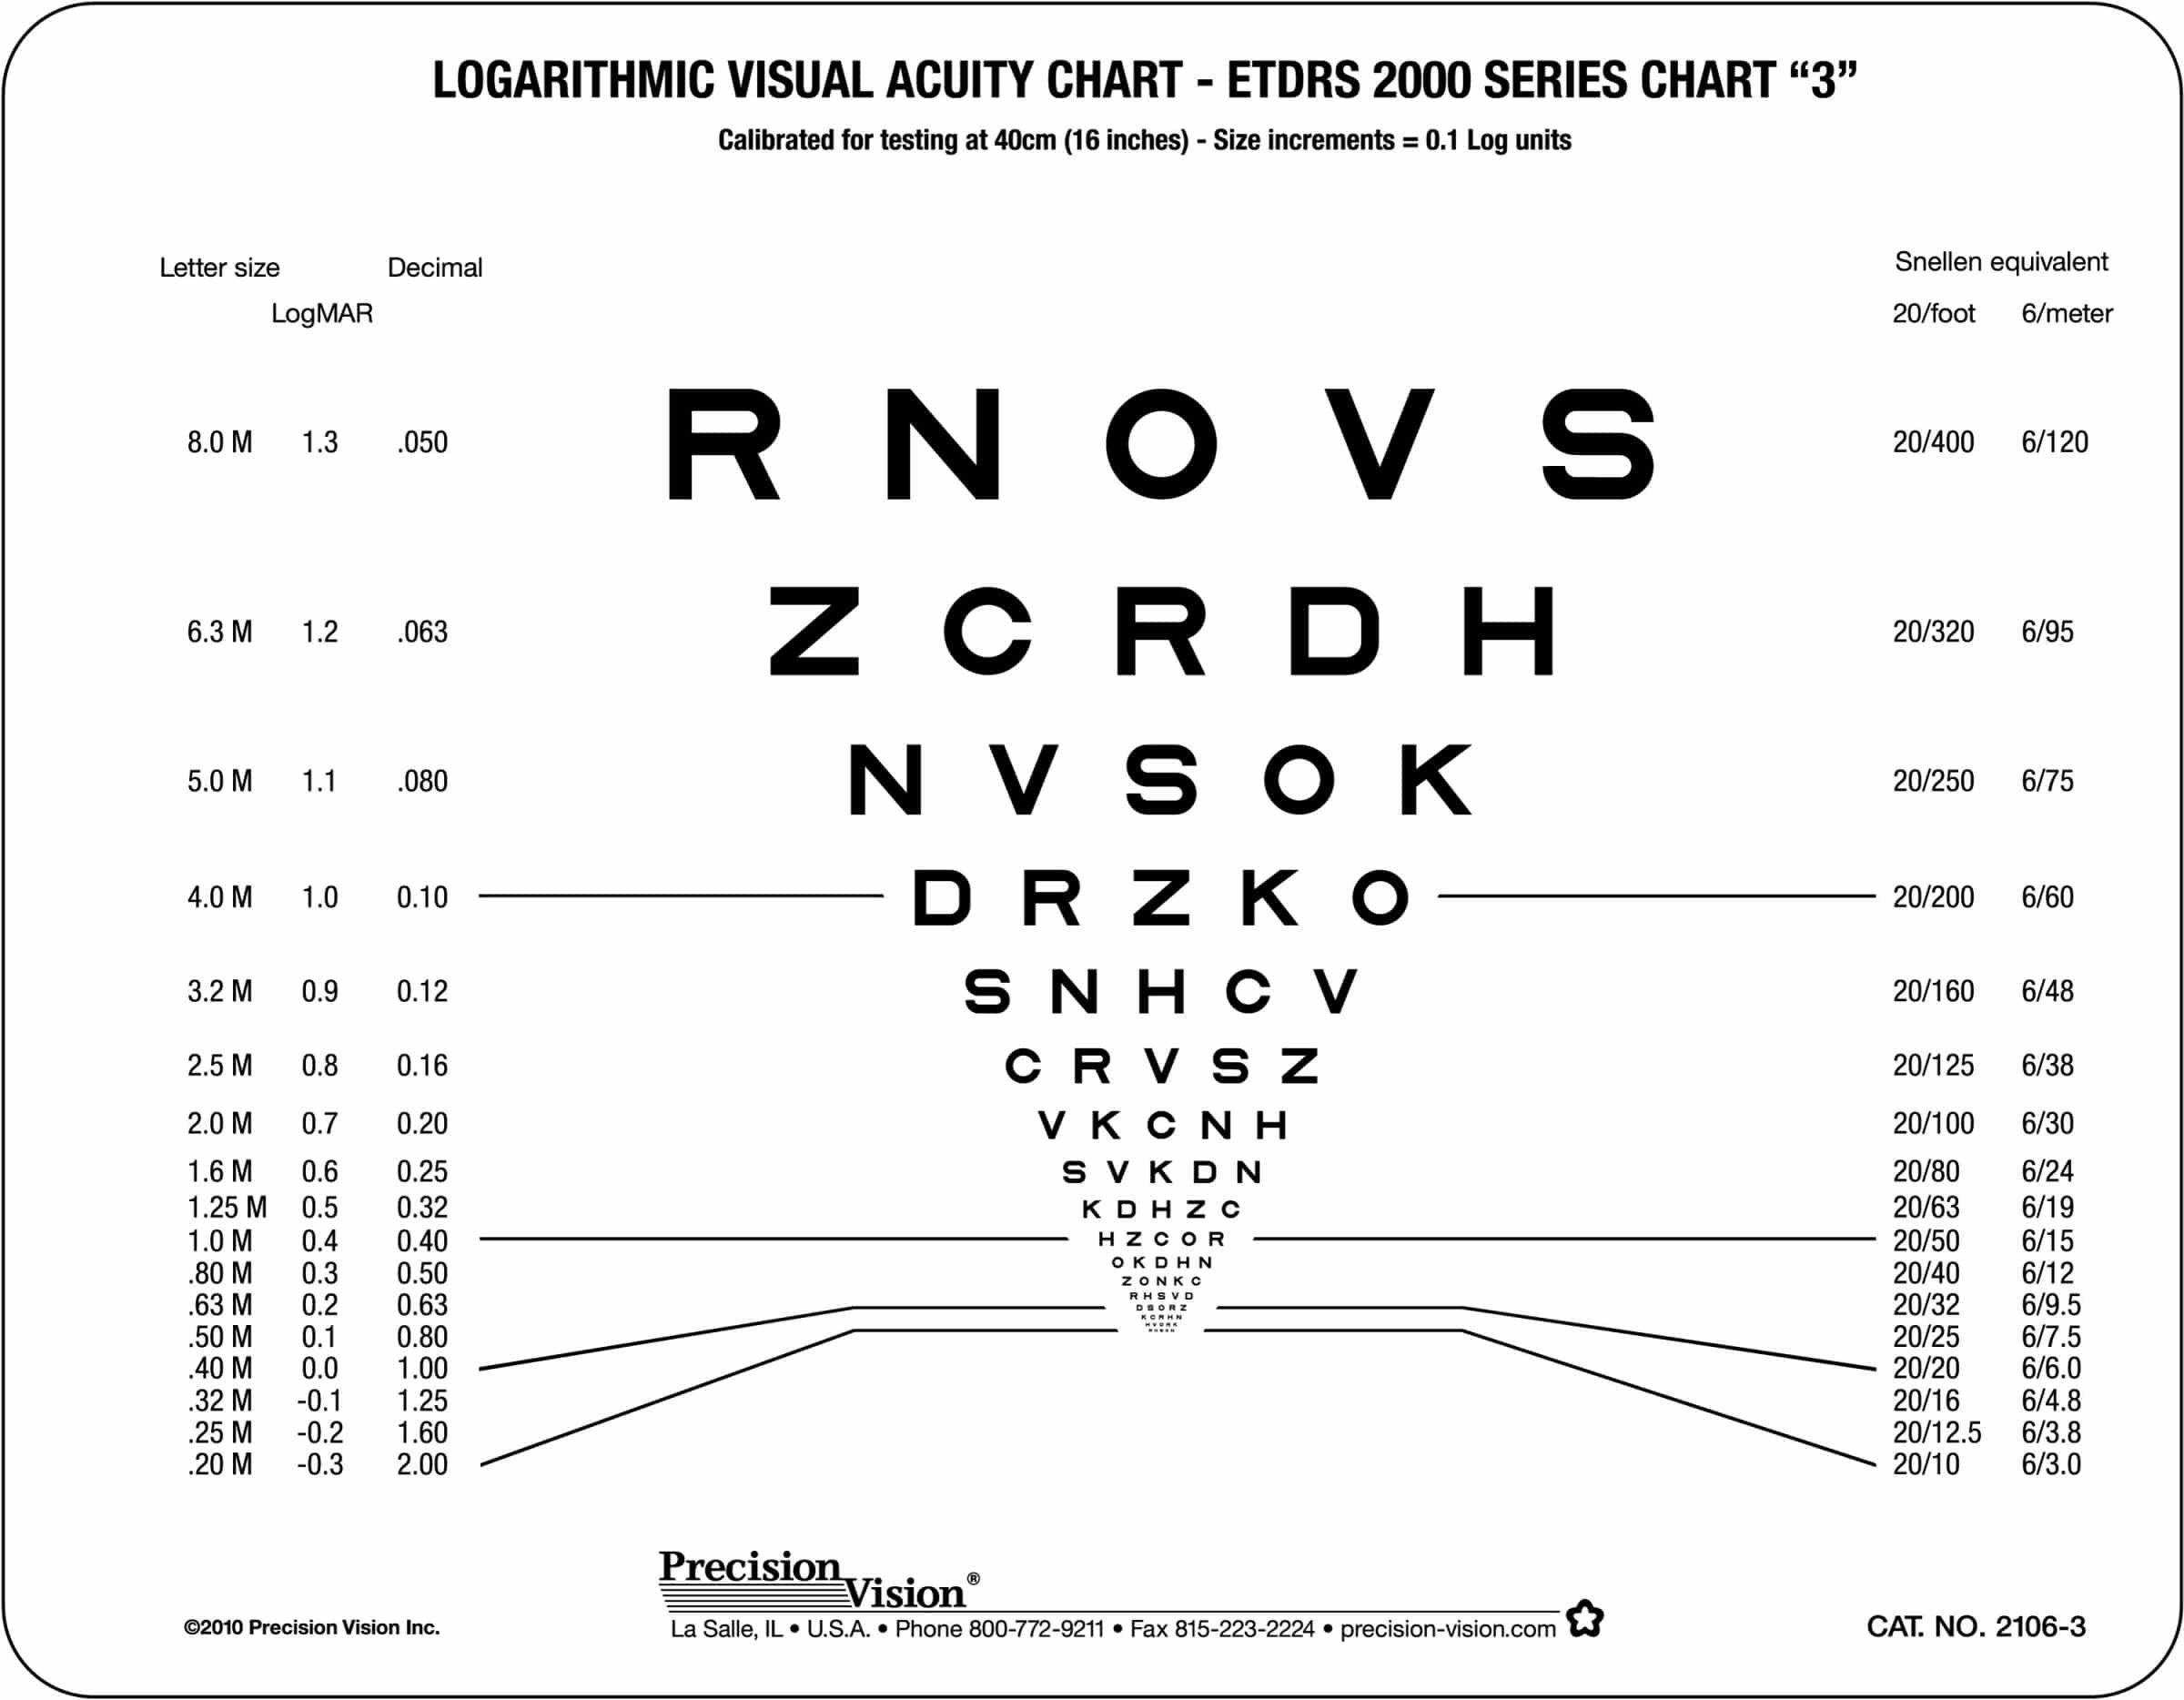 Near Vision Screening Chart